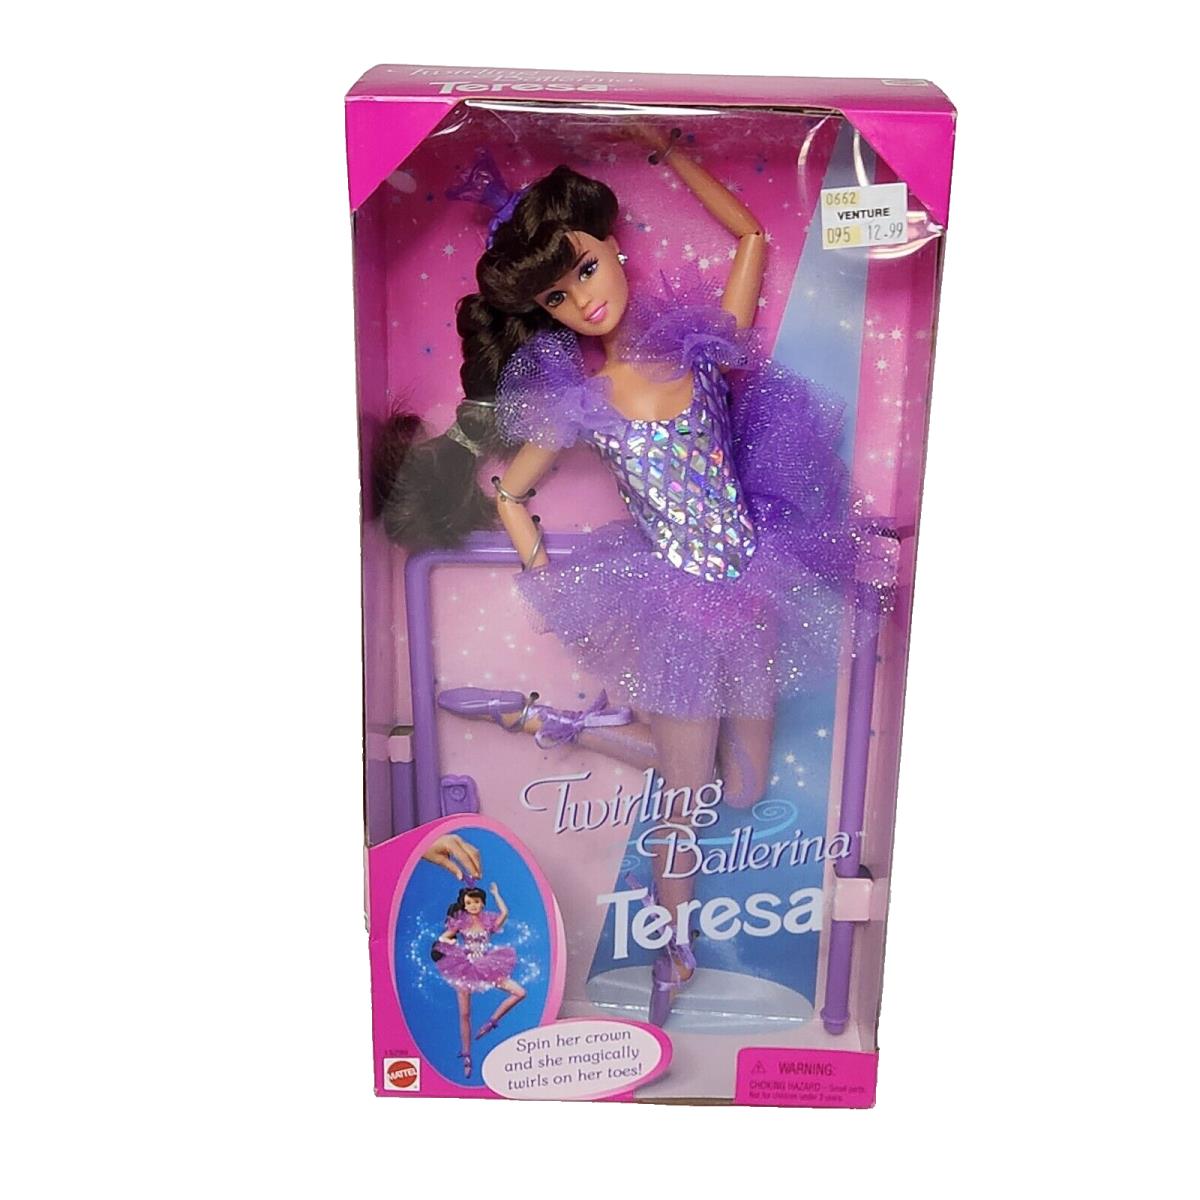 Vintage 1995 Twirling Ballerina Teresa Barbie Doll 15299 Mattel Box